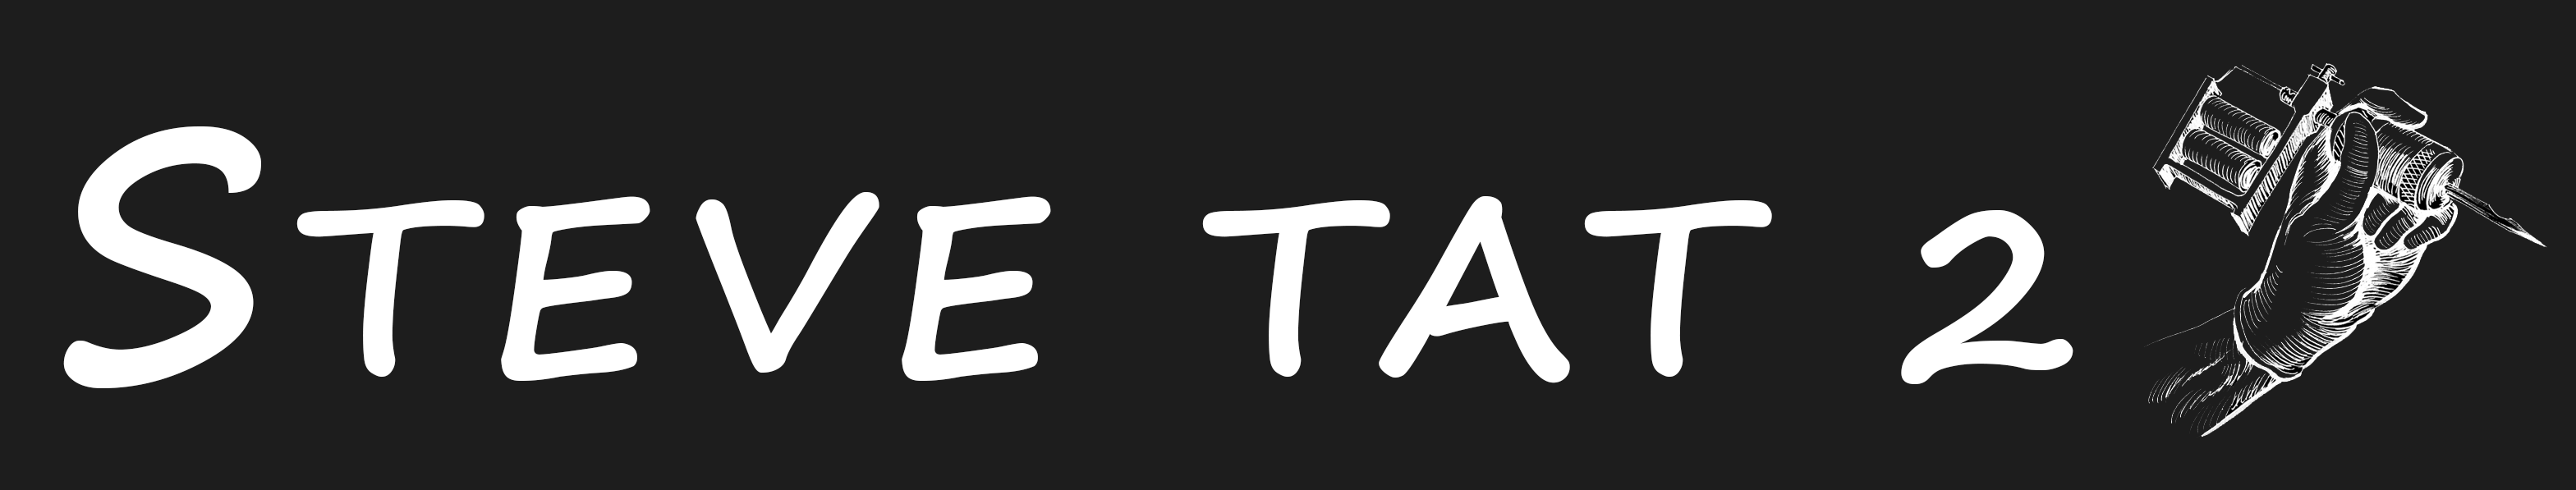 Steve Tat 2 New Logo 2